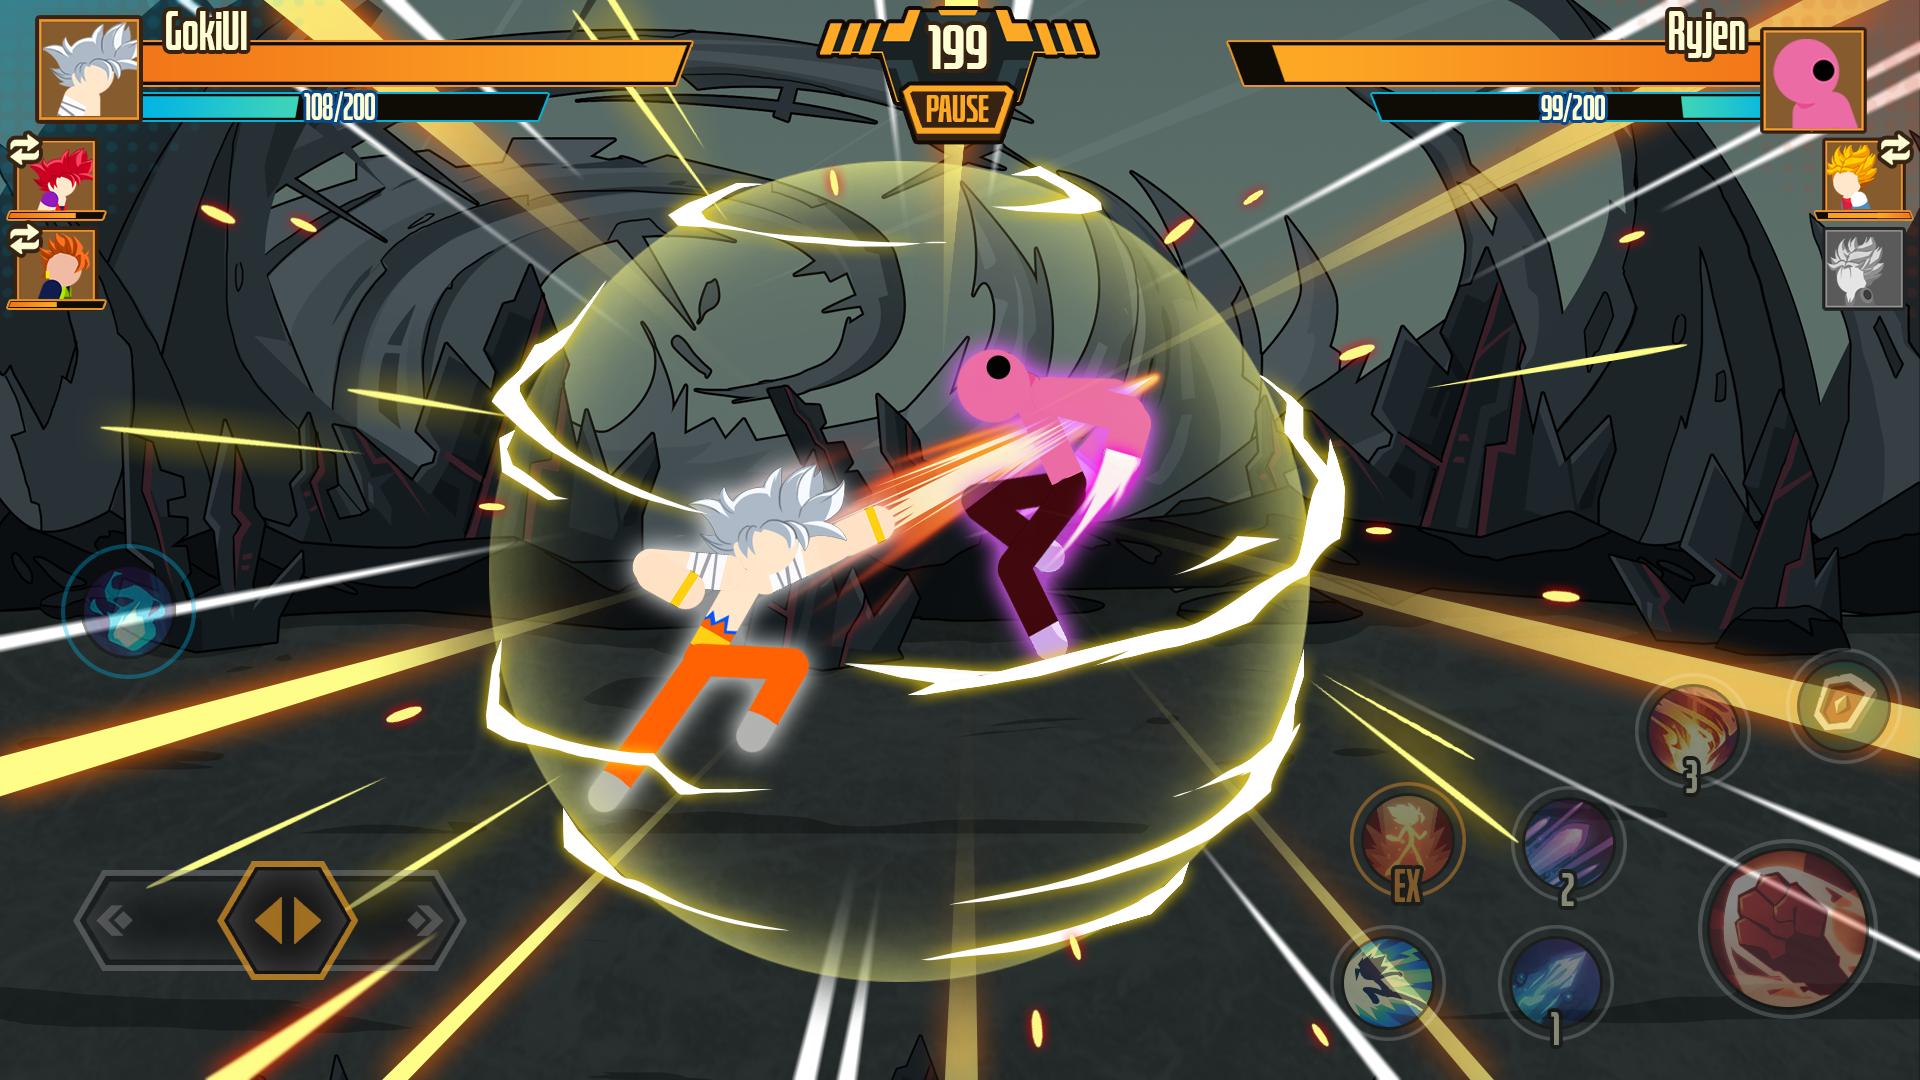 Stickman Battle Fight Mod apk [Unlimited money] download - Stickman Battle  Fight MOD apk 4.1 free for Android.